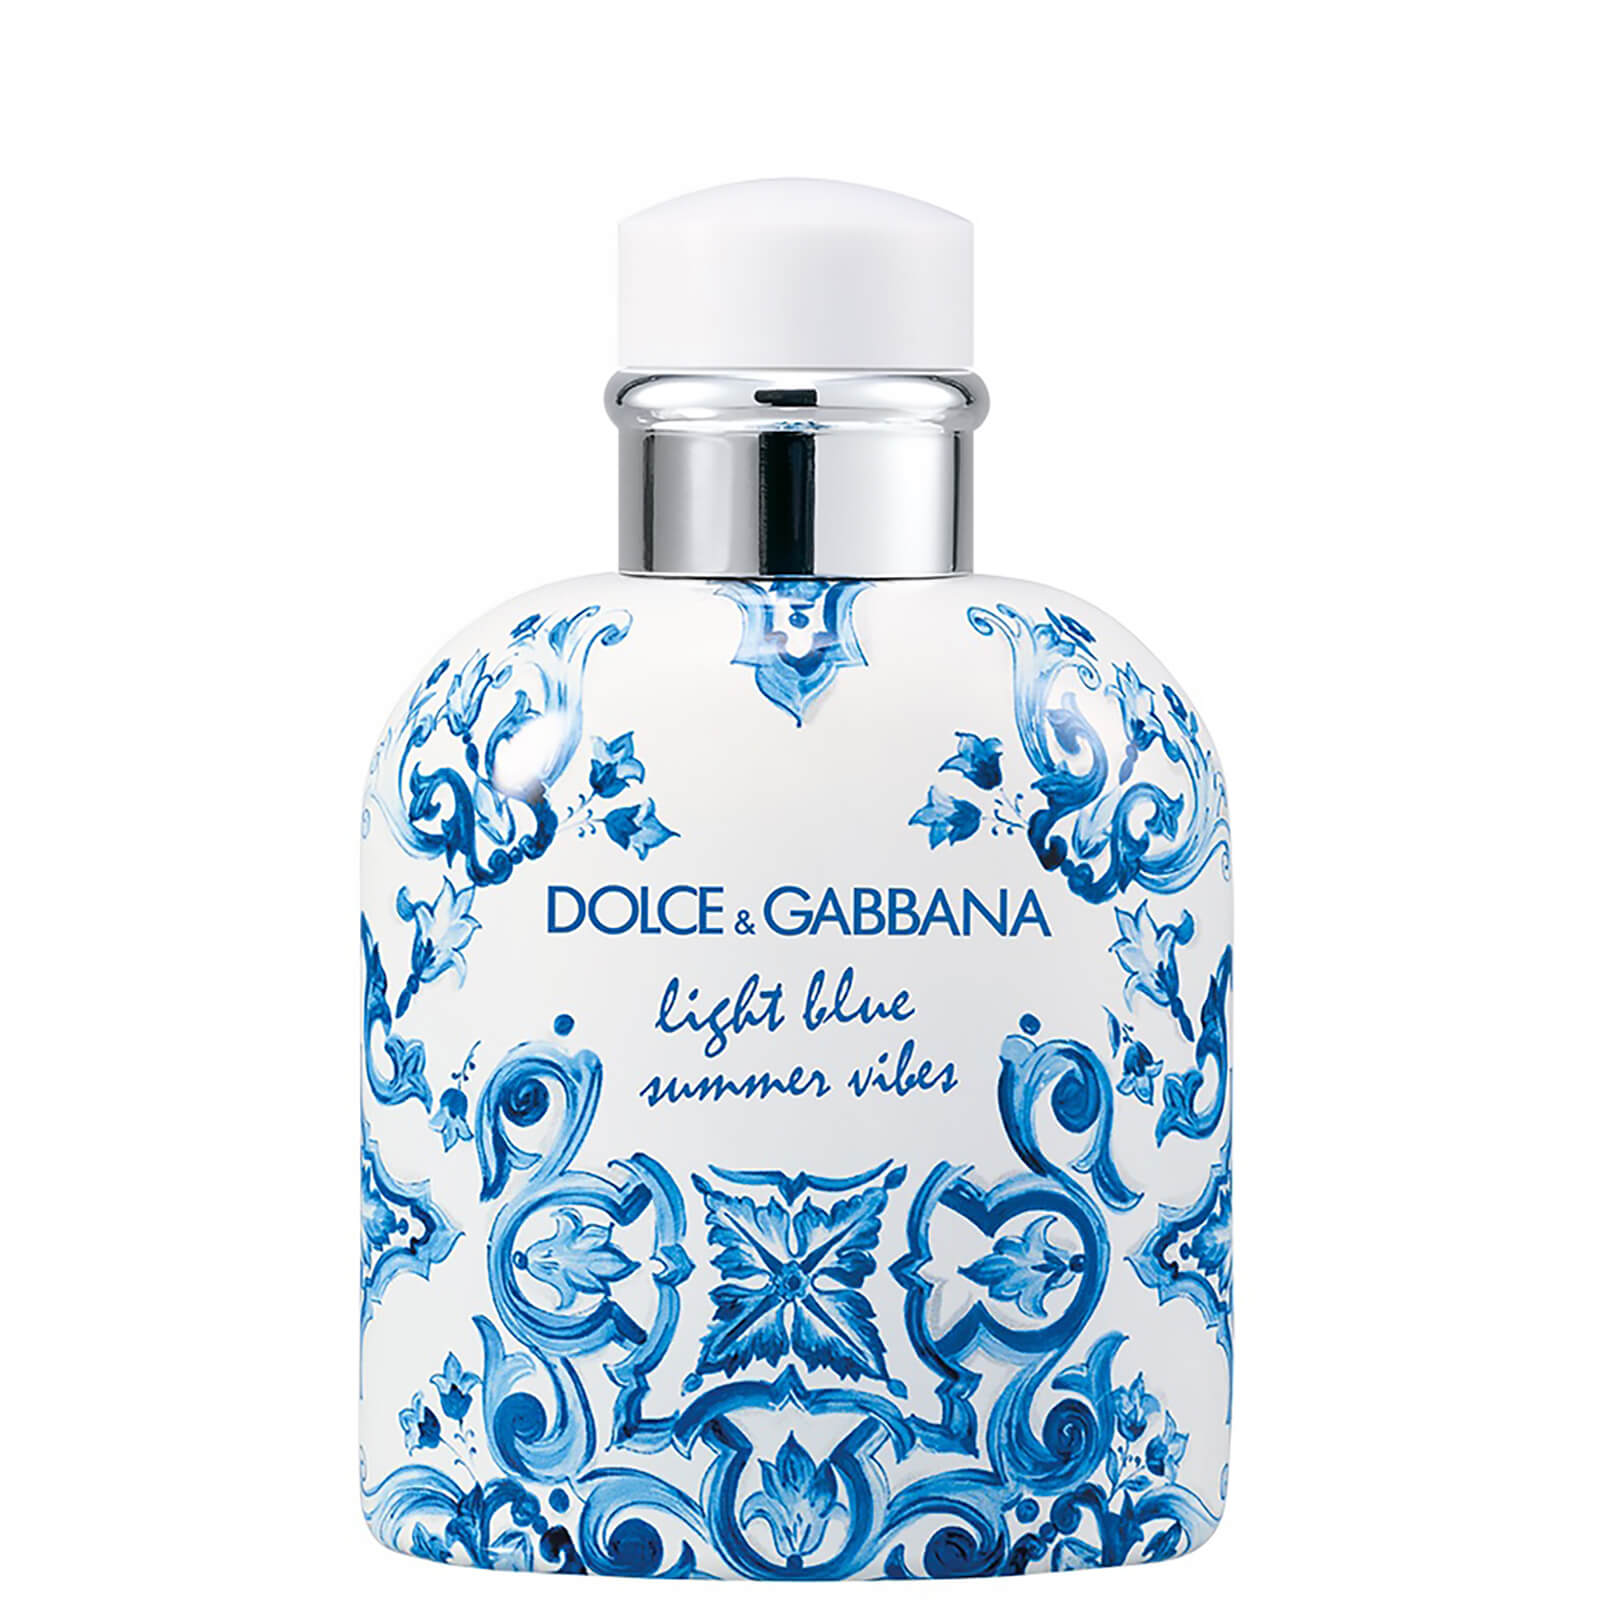 Dolce & Gabbana Light Blue Homme Summer Vibes Limited Edition Eau de toilette spray 125 ml